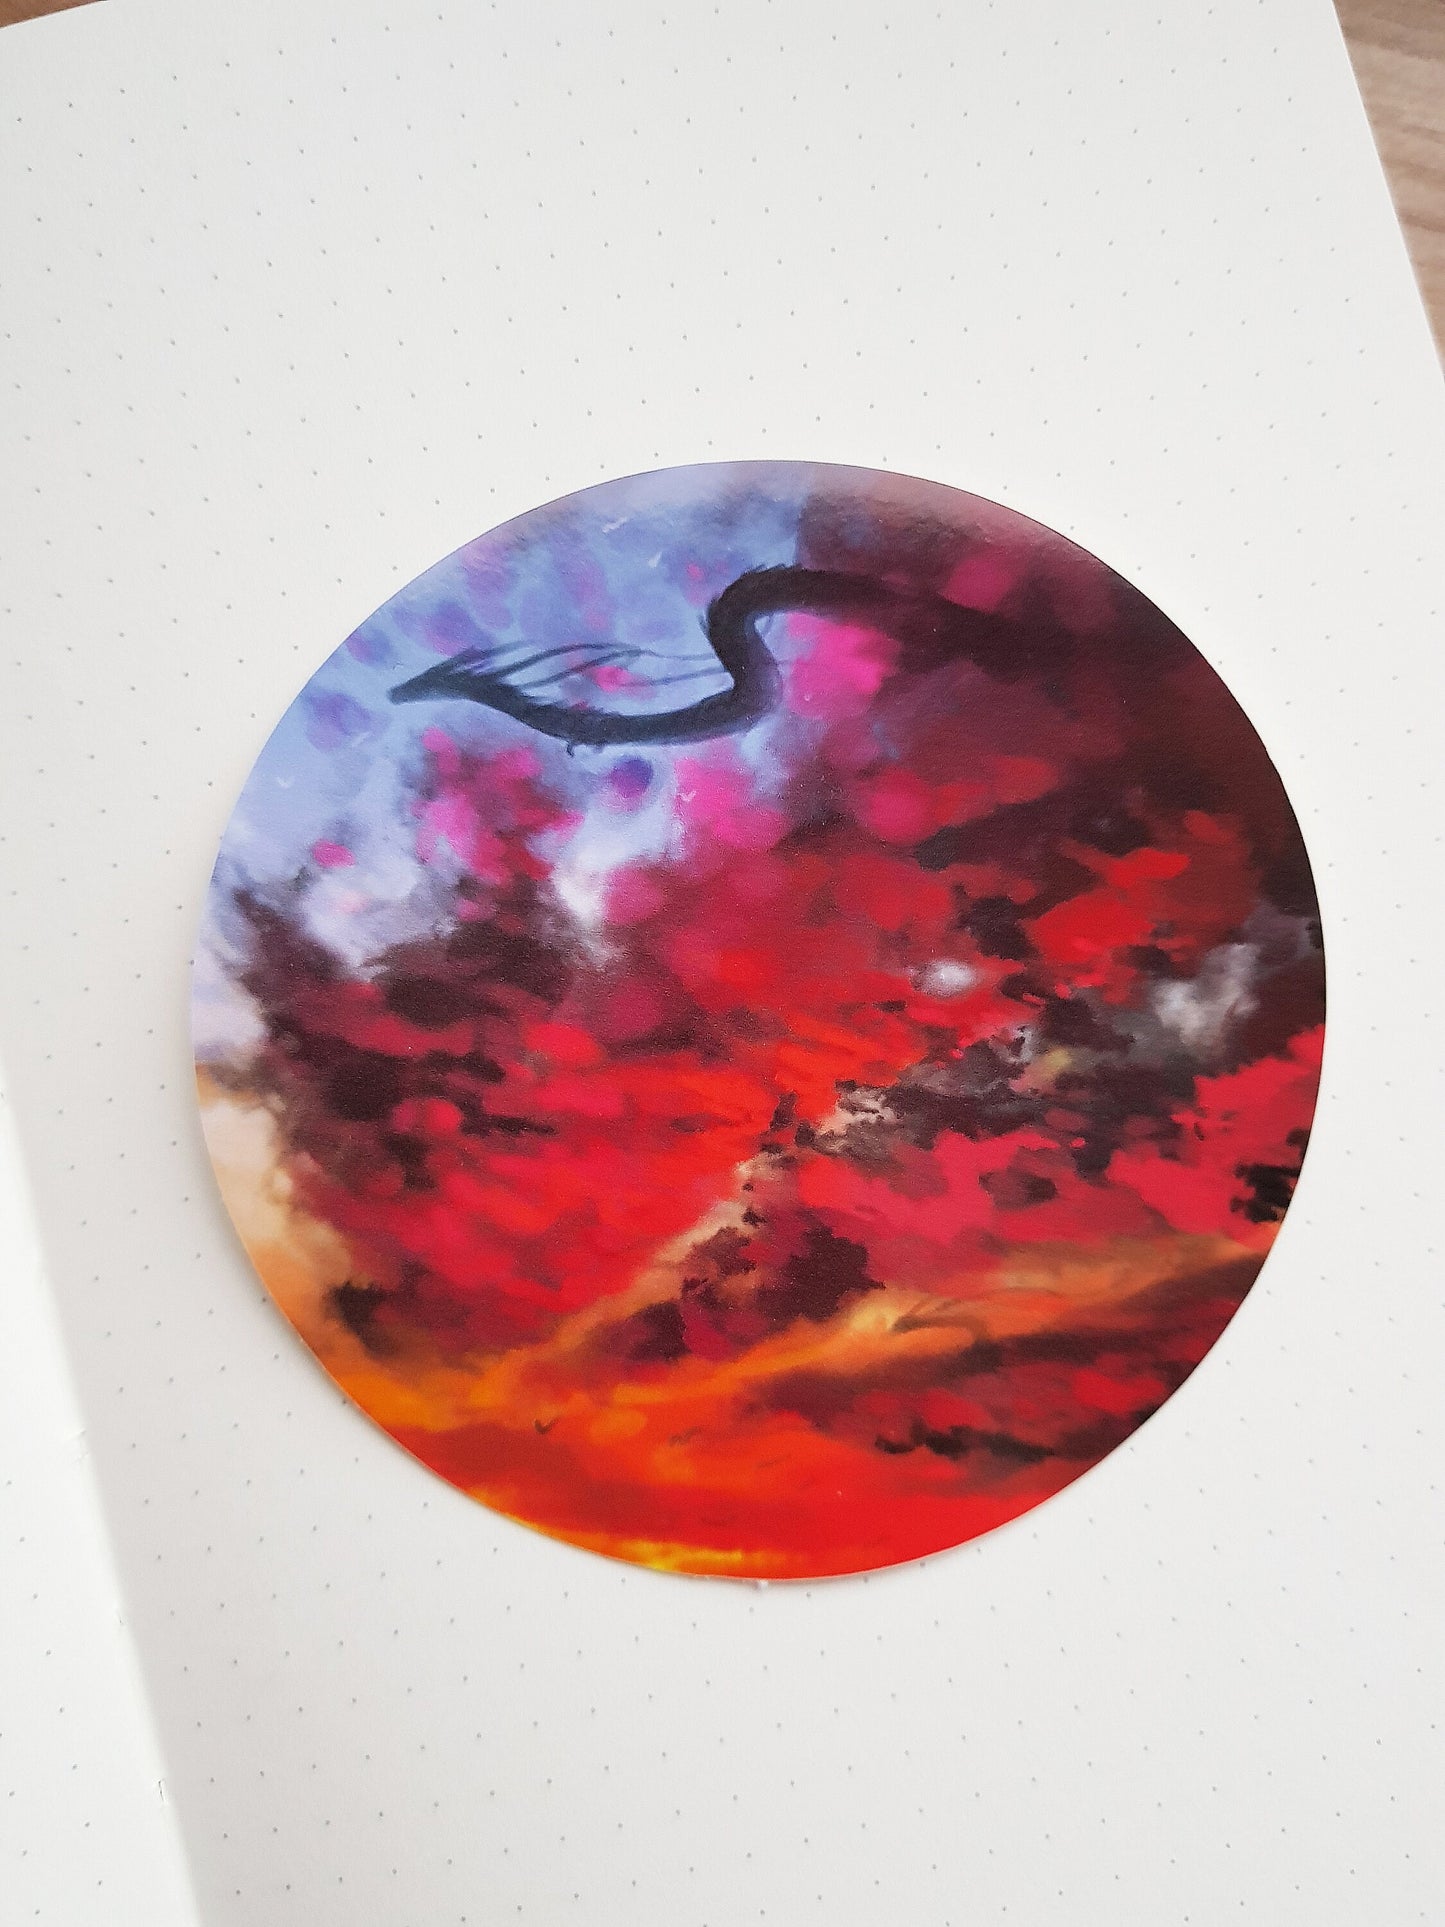 Red Dragon Sky - White Vinyl Sticker